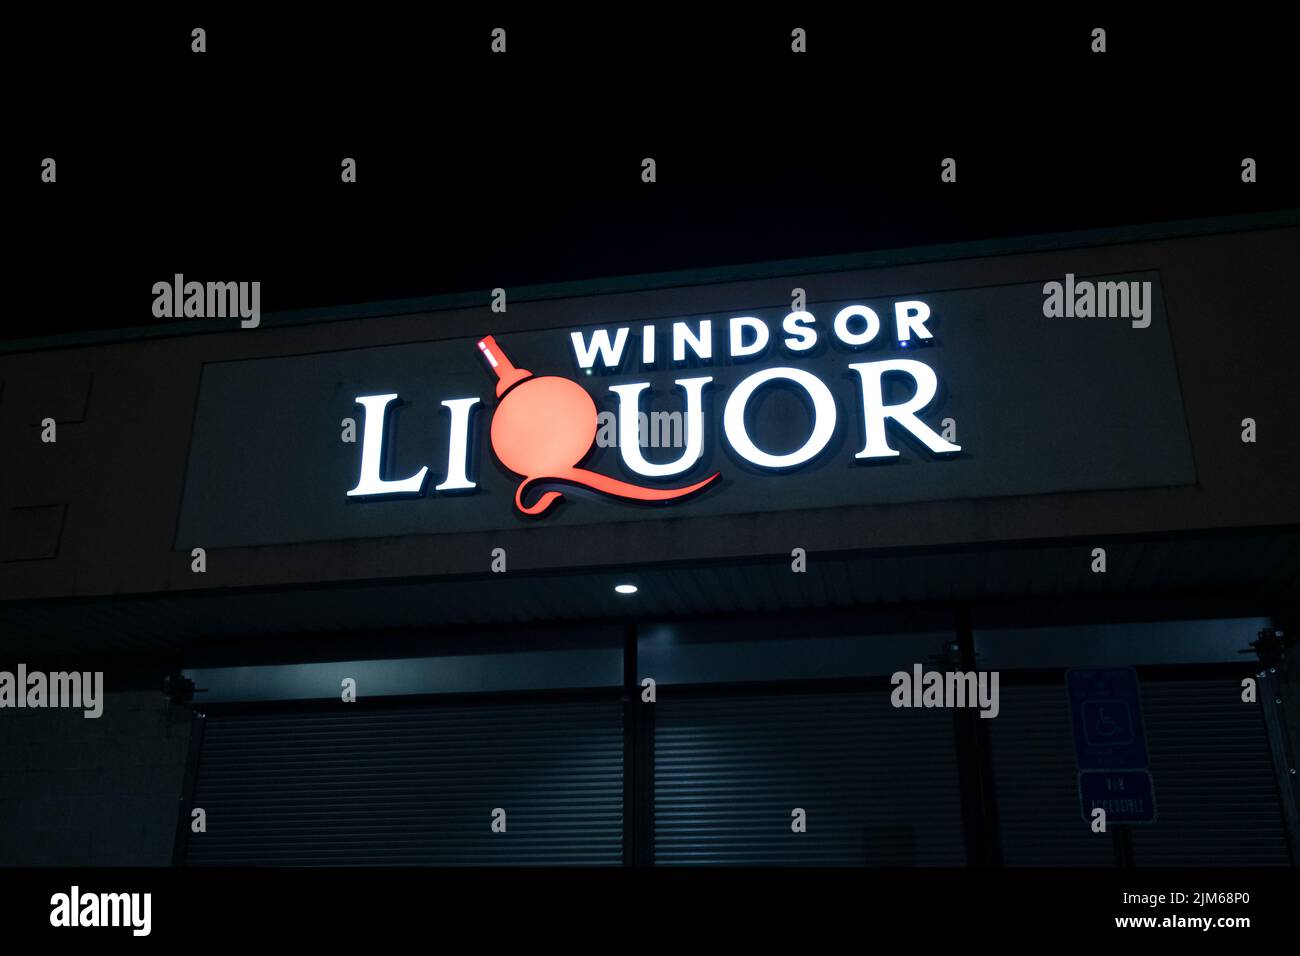 Augusta, Ga USA - 10 18 21: liquor store sign at night Stock Photo